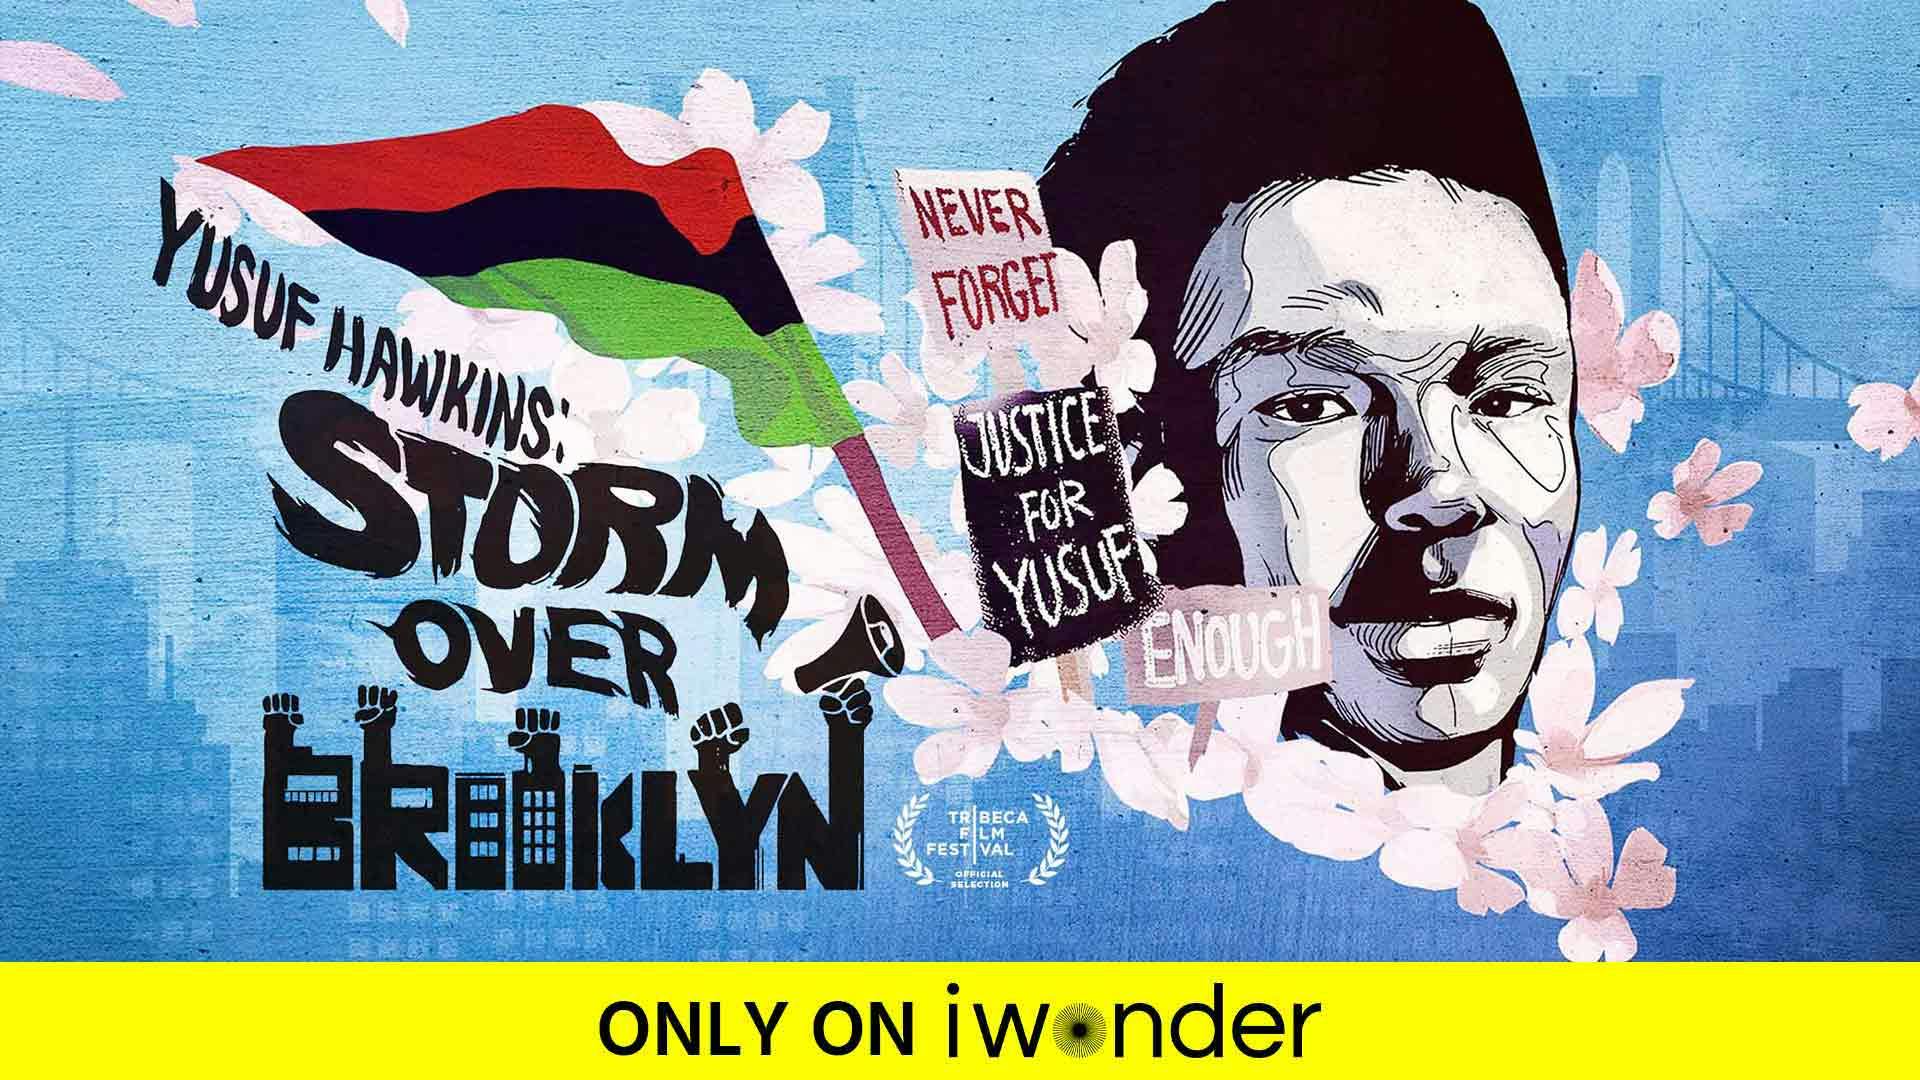 Yusuf Hawkins: Storm over Brooklyn